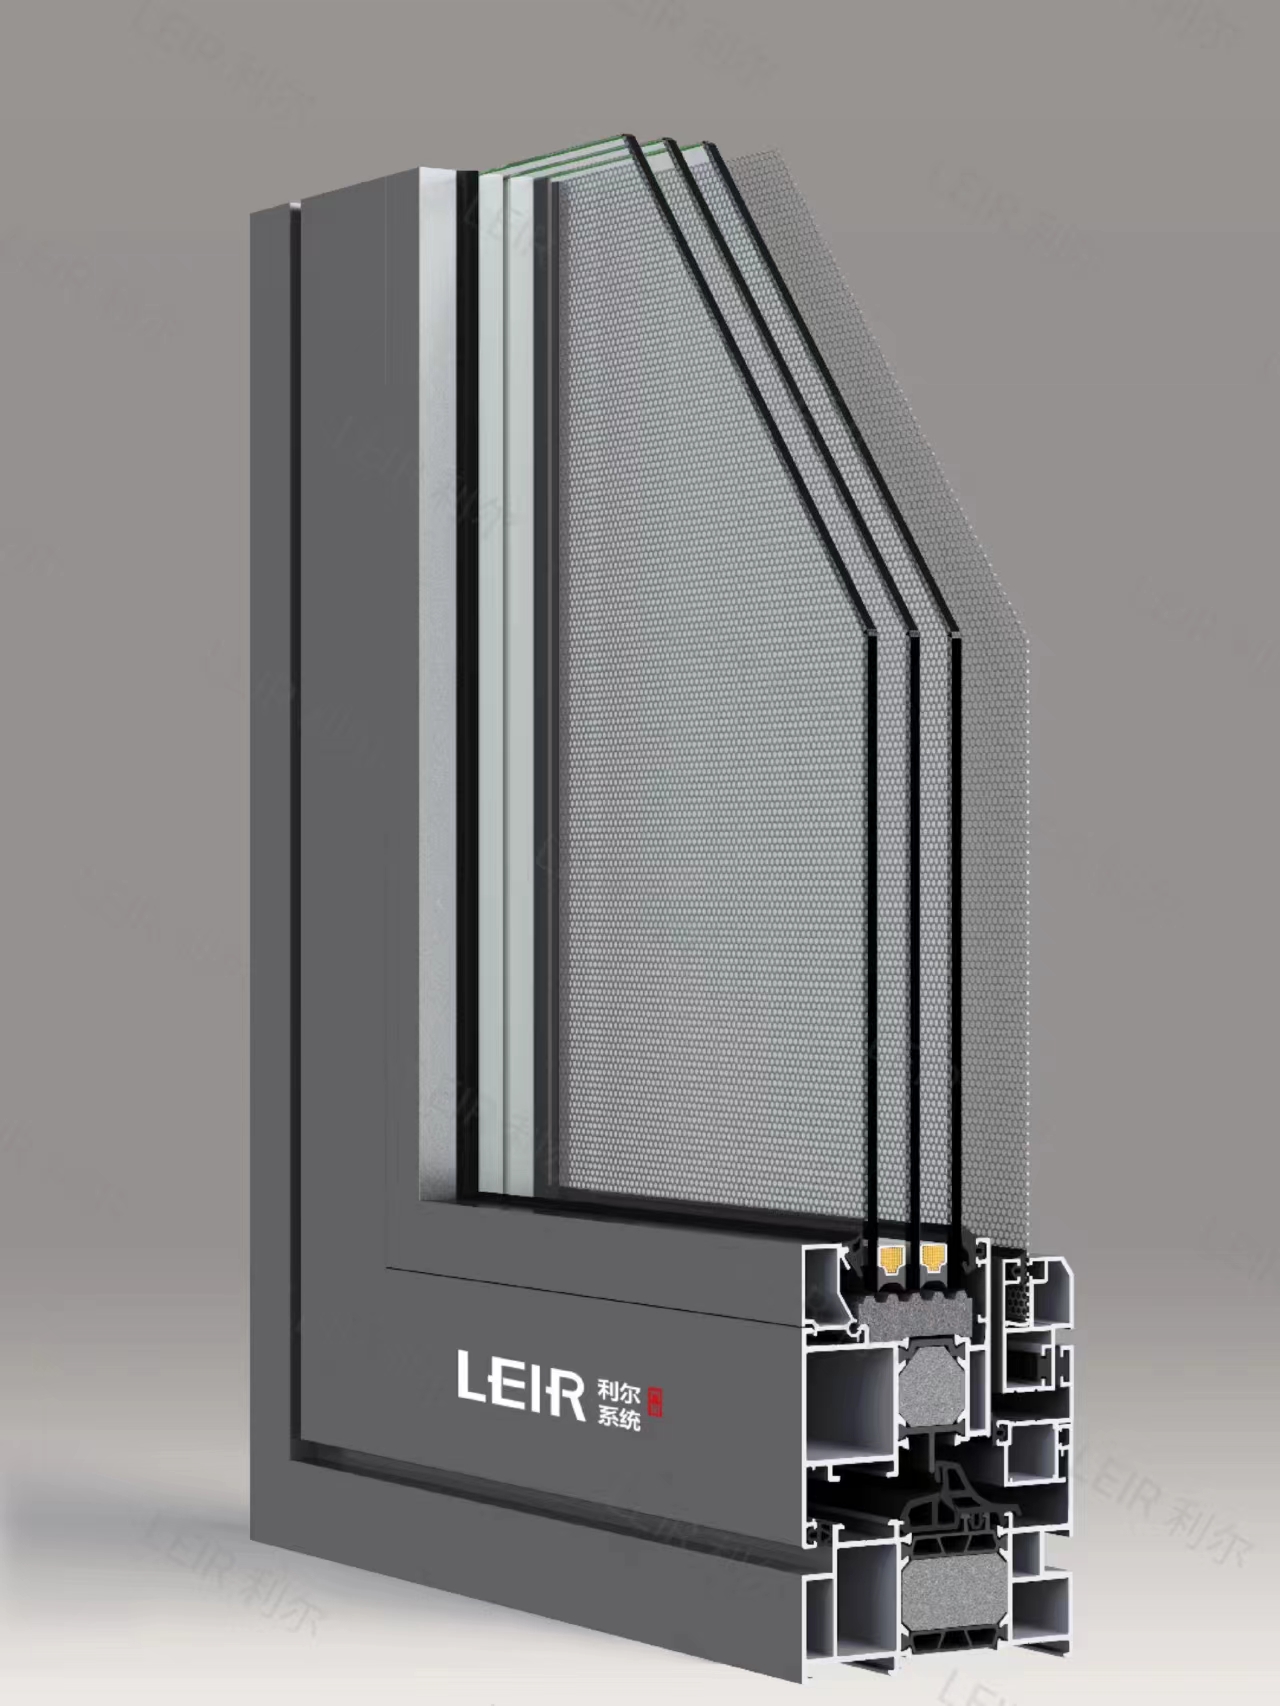 LEIR 利尔系统系列产品